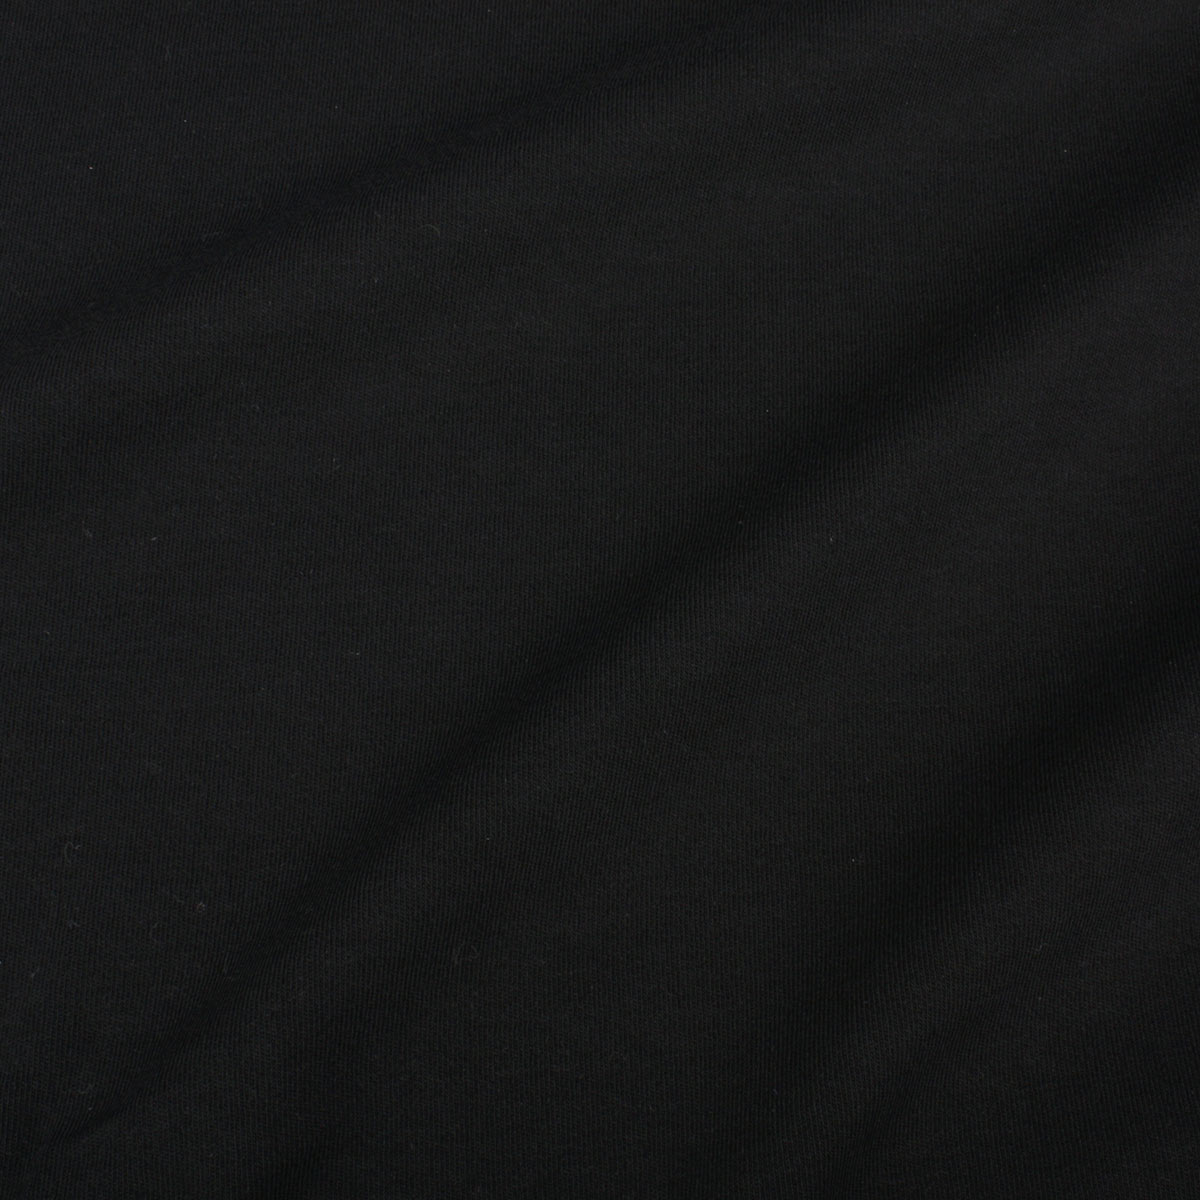 Black interlock fabric from organic cotton and elastane